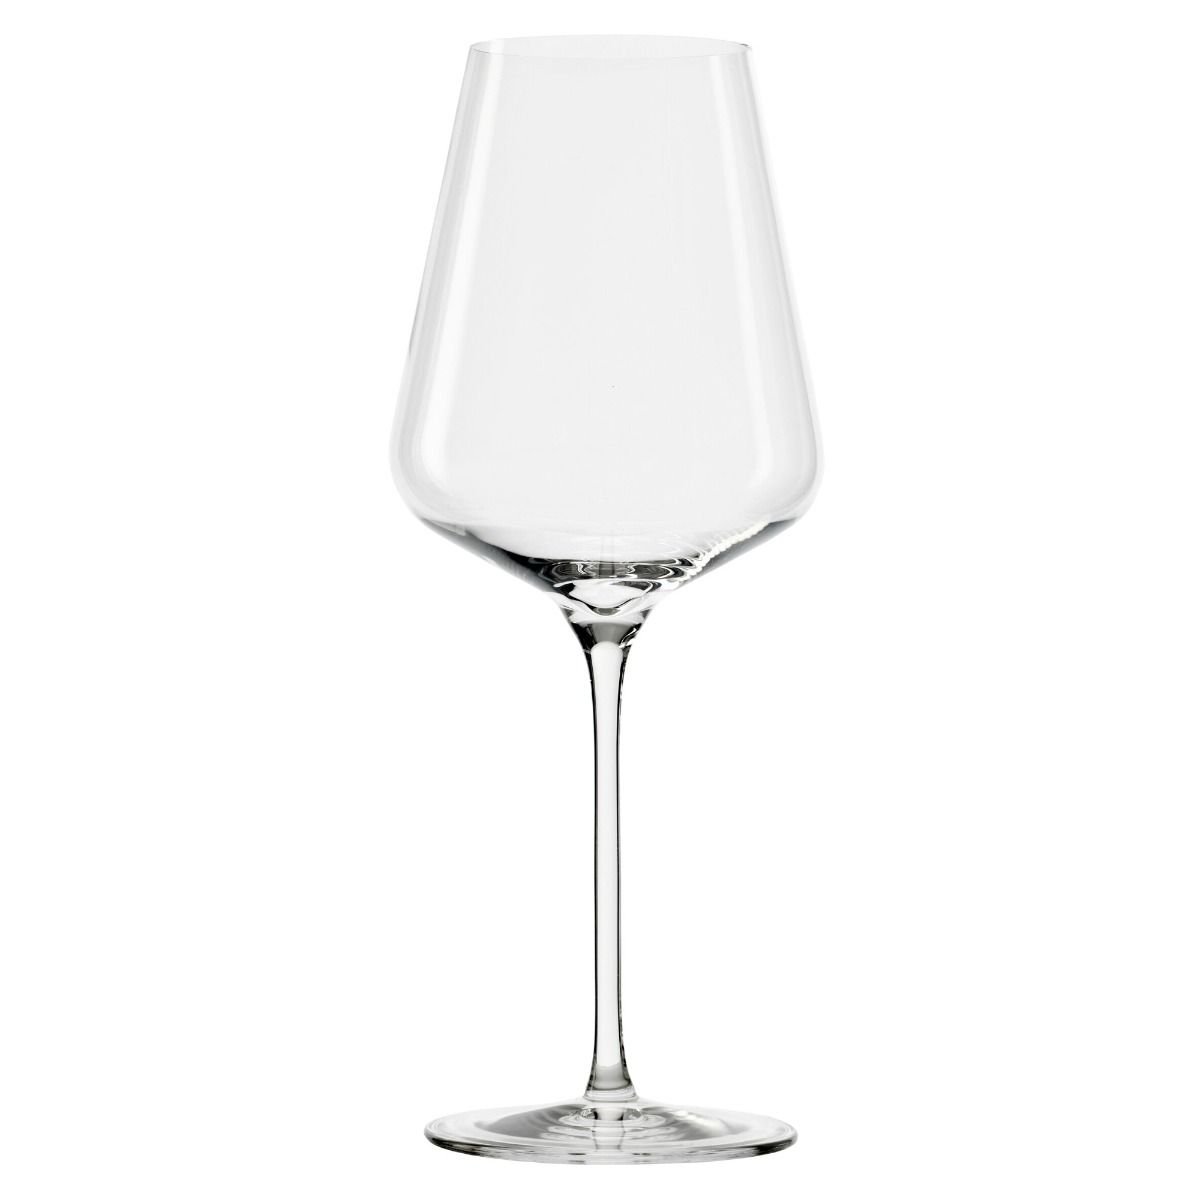 Stolzle Lausitz Quatrophil German Made Crystal White Wine Glass, Set of 6